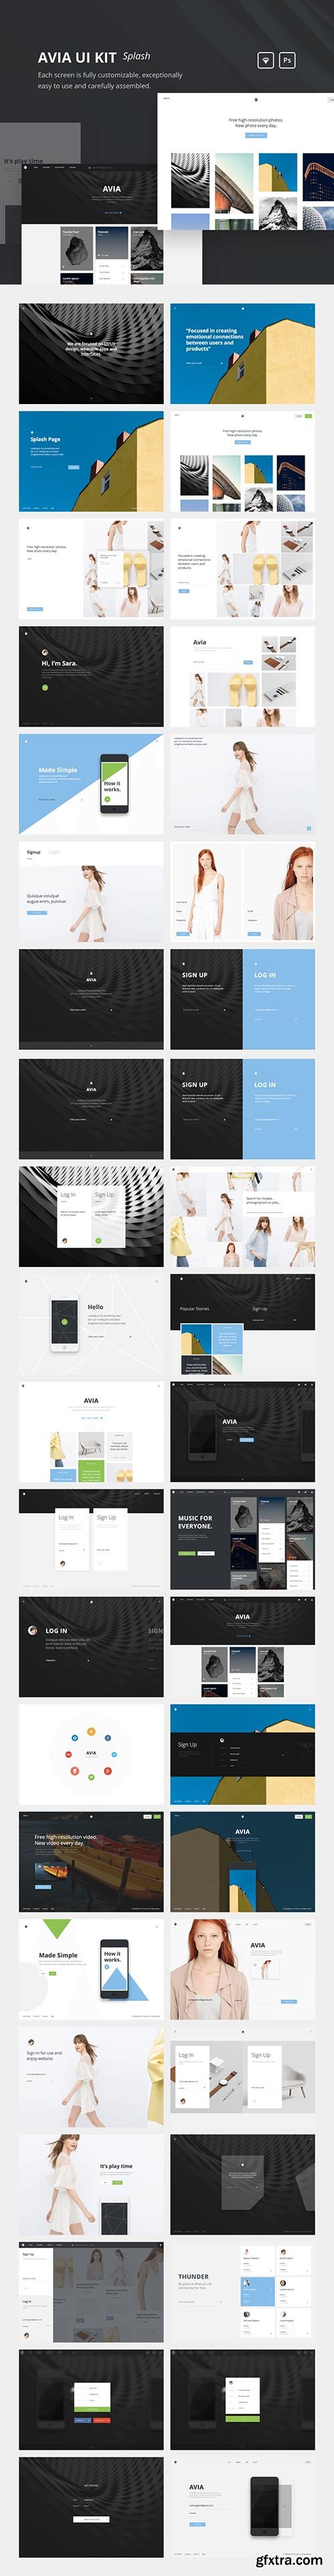 Avia UI Kit: Splash - Beautiful 40 template home page kit